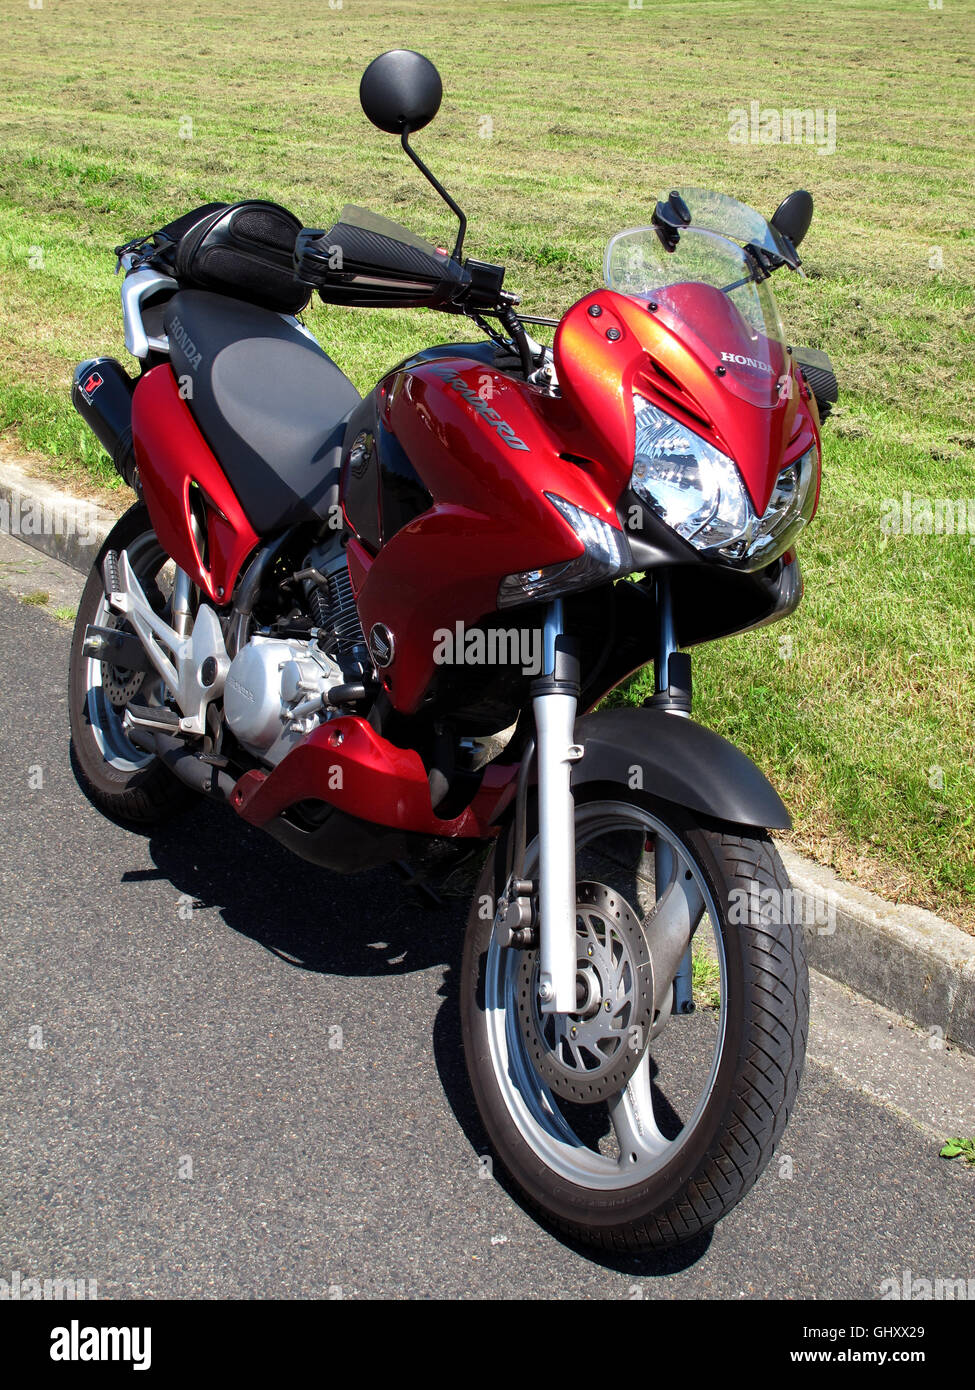 Moto Honda Varadero 125 en pays, fabriqué au Japon Photo Stock - Alamy